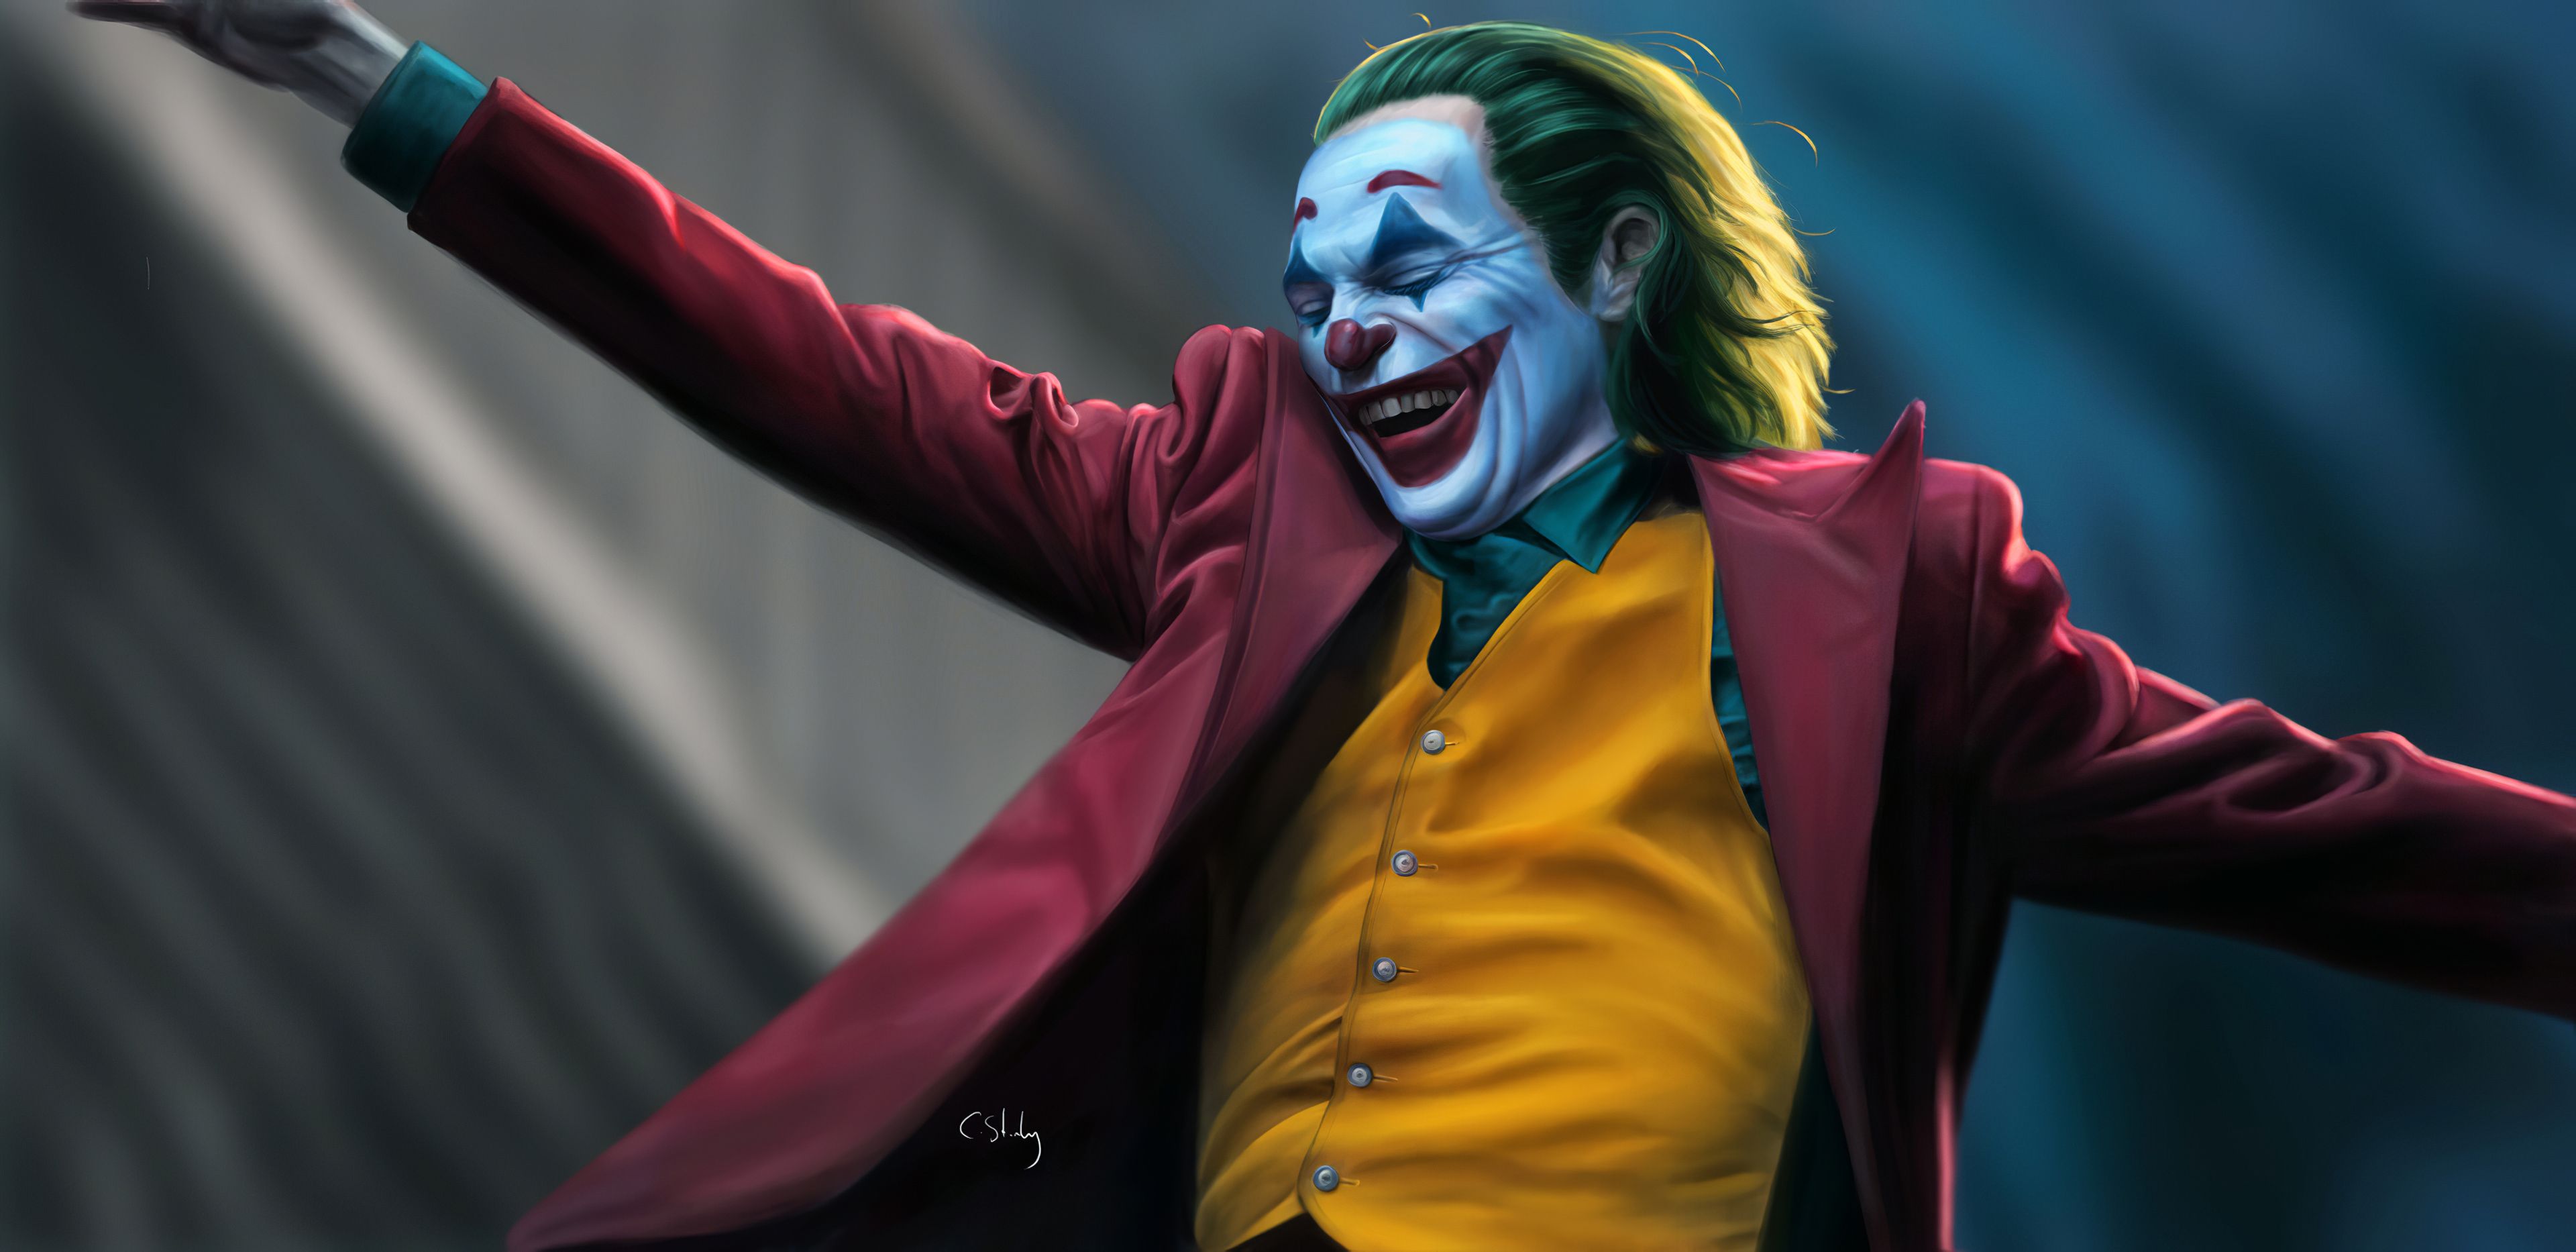 The Joker smiling Wallpaper 4k Ultra HD